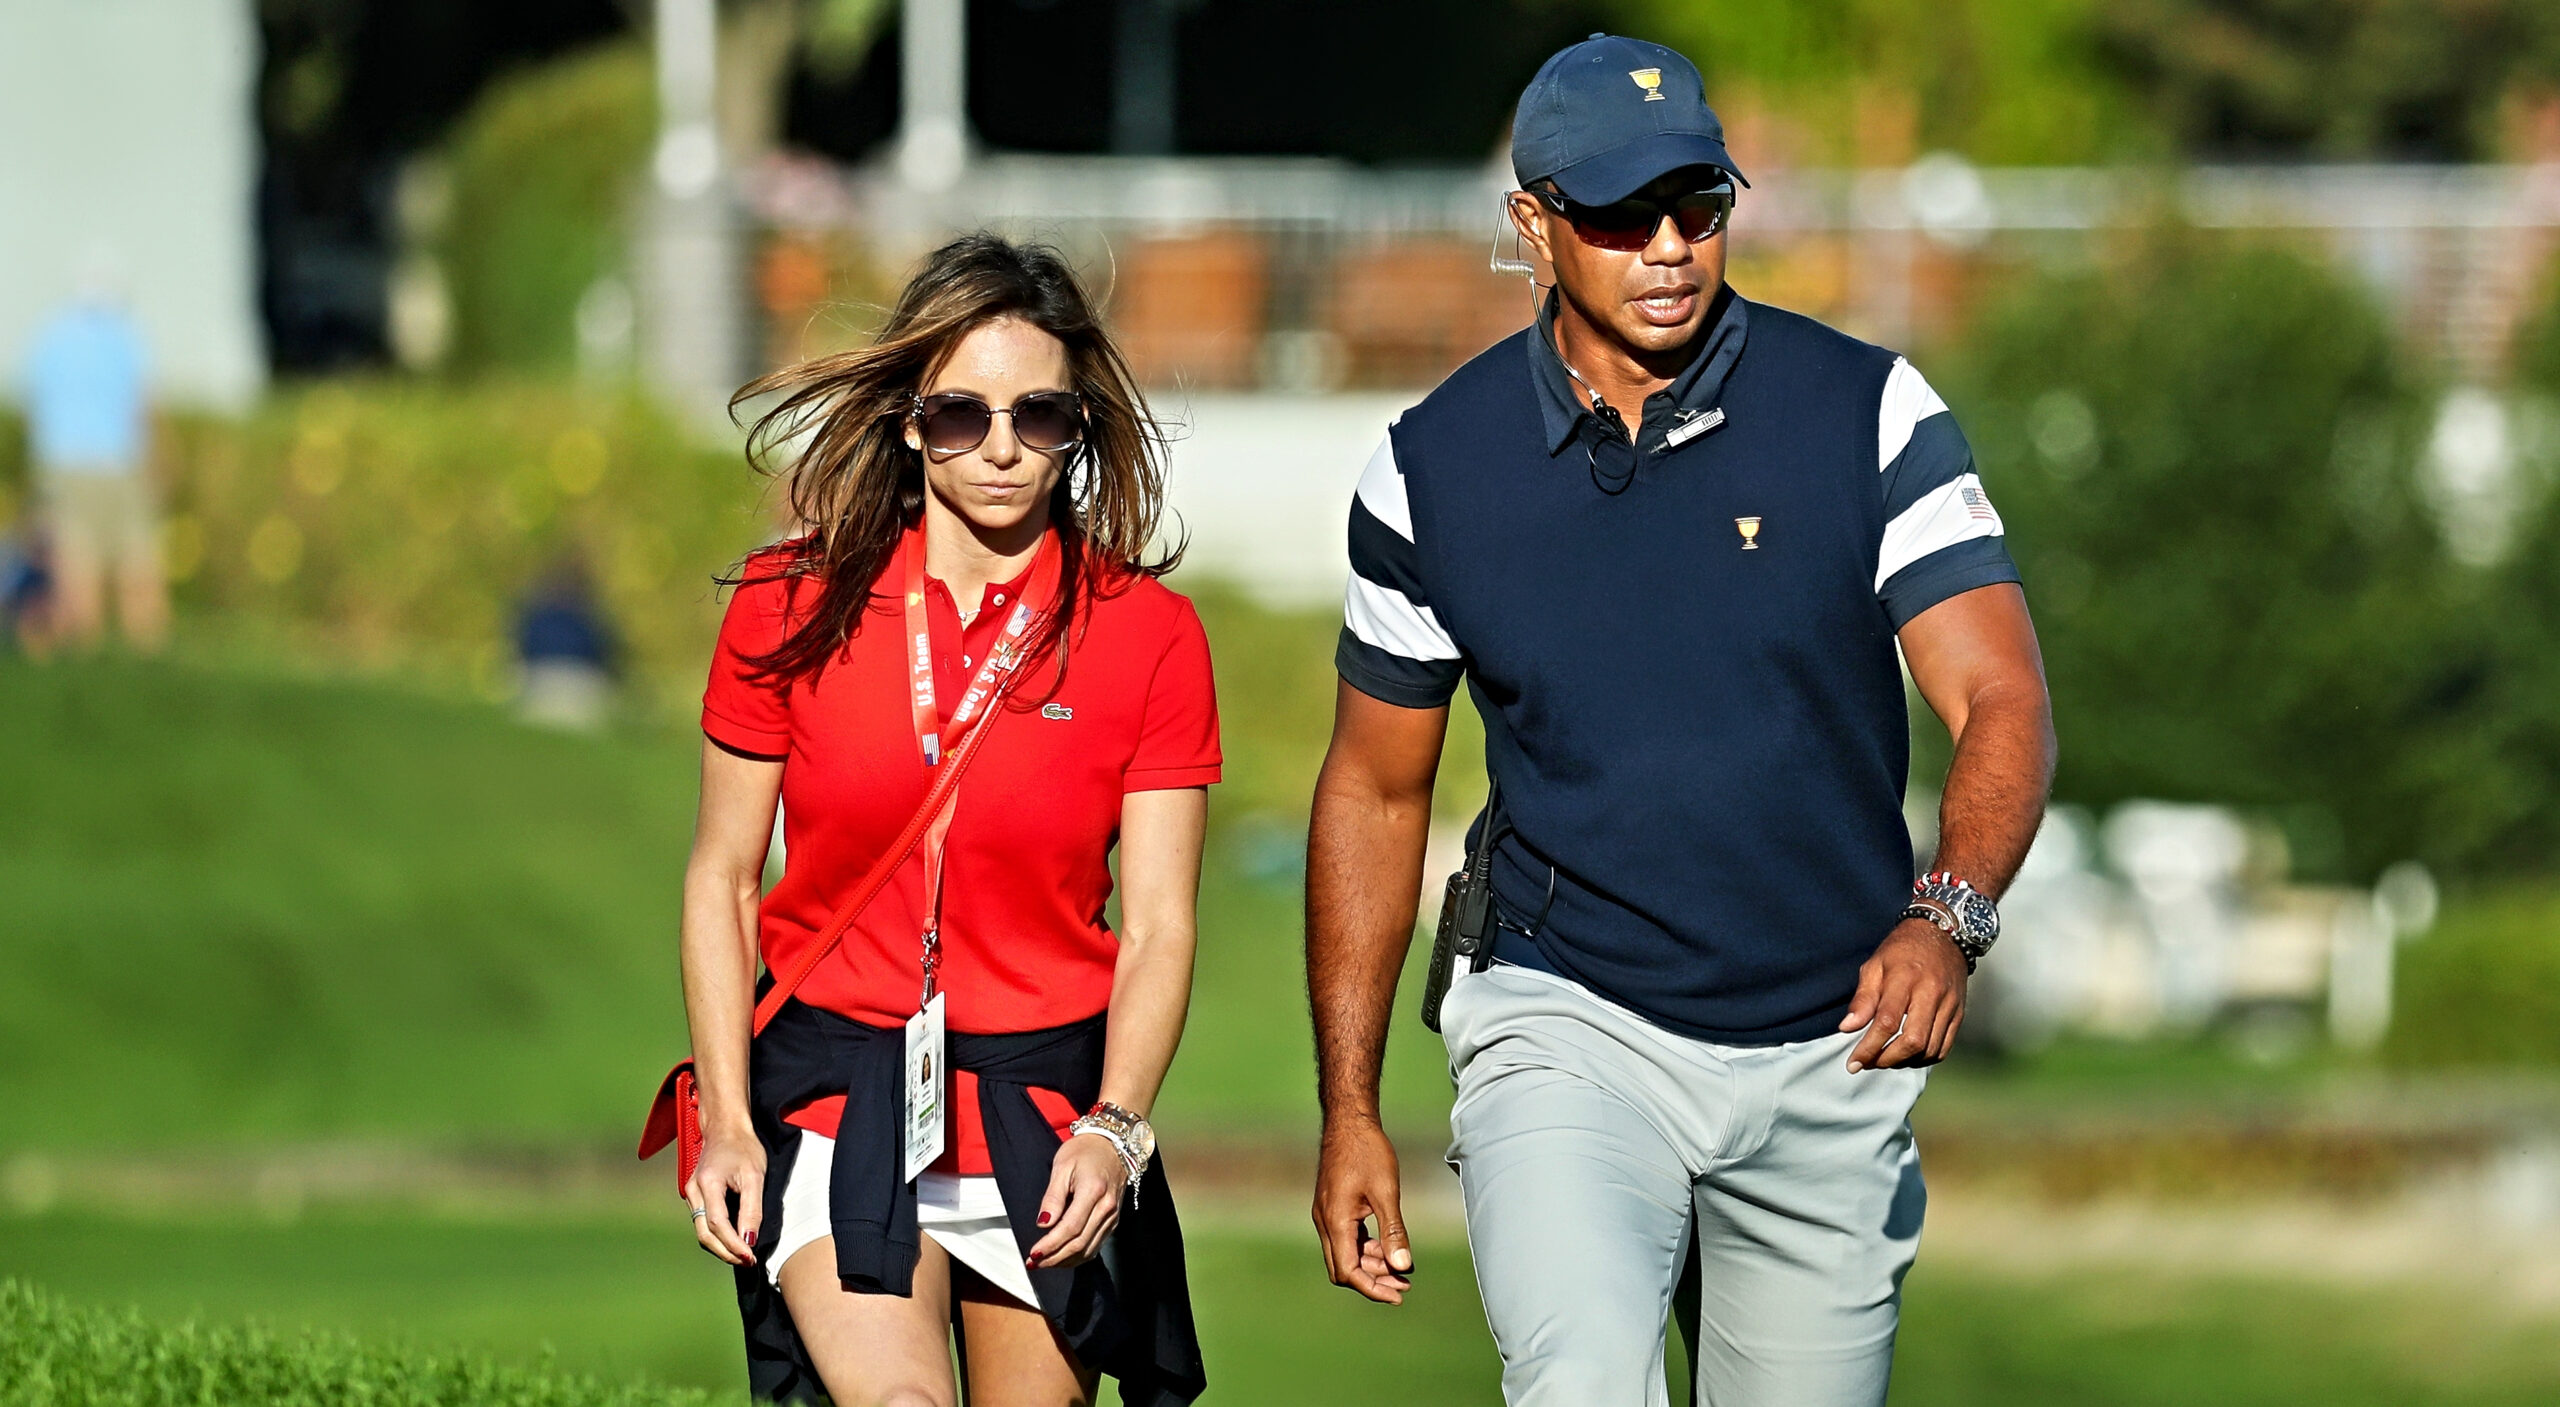 Details On Tiger Woods Breakup With Ex-GF Erica Herman